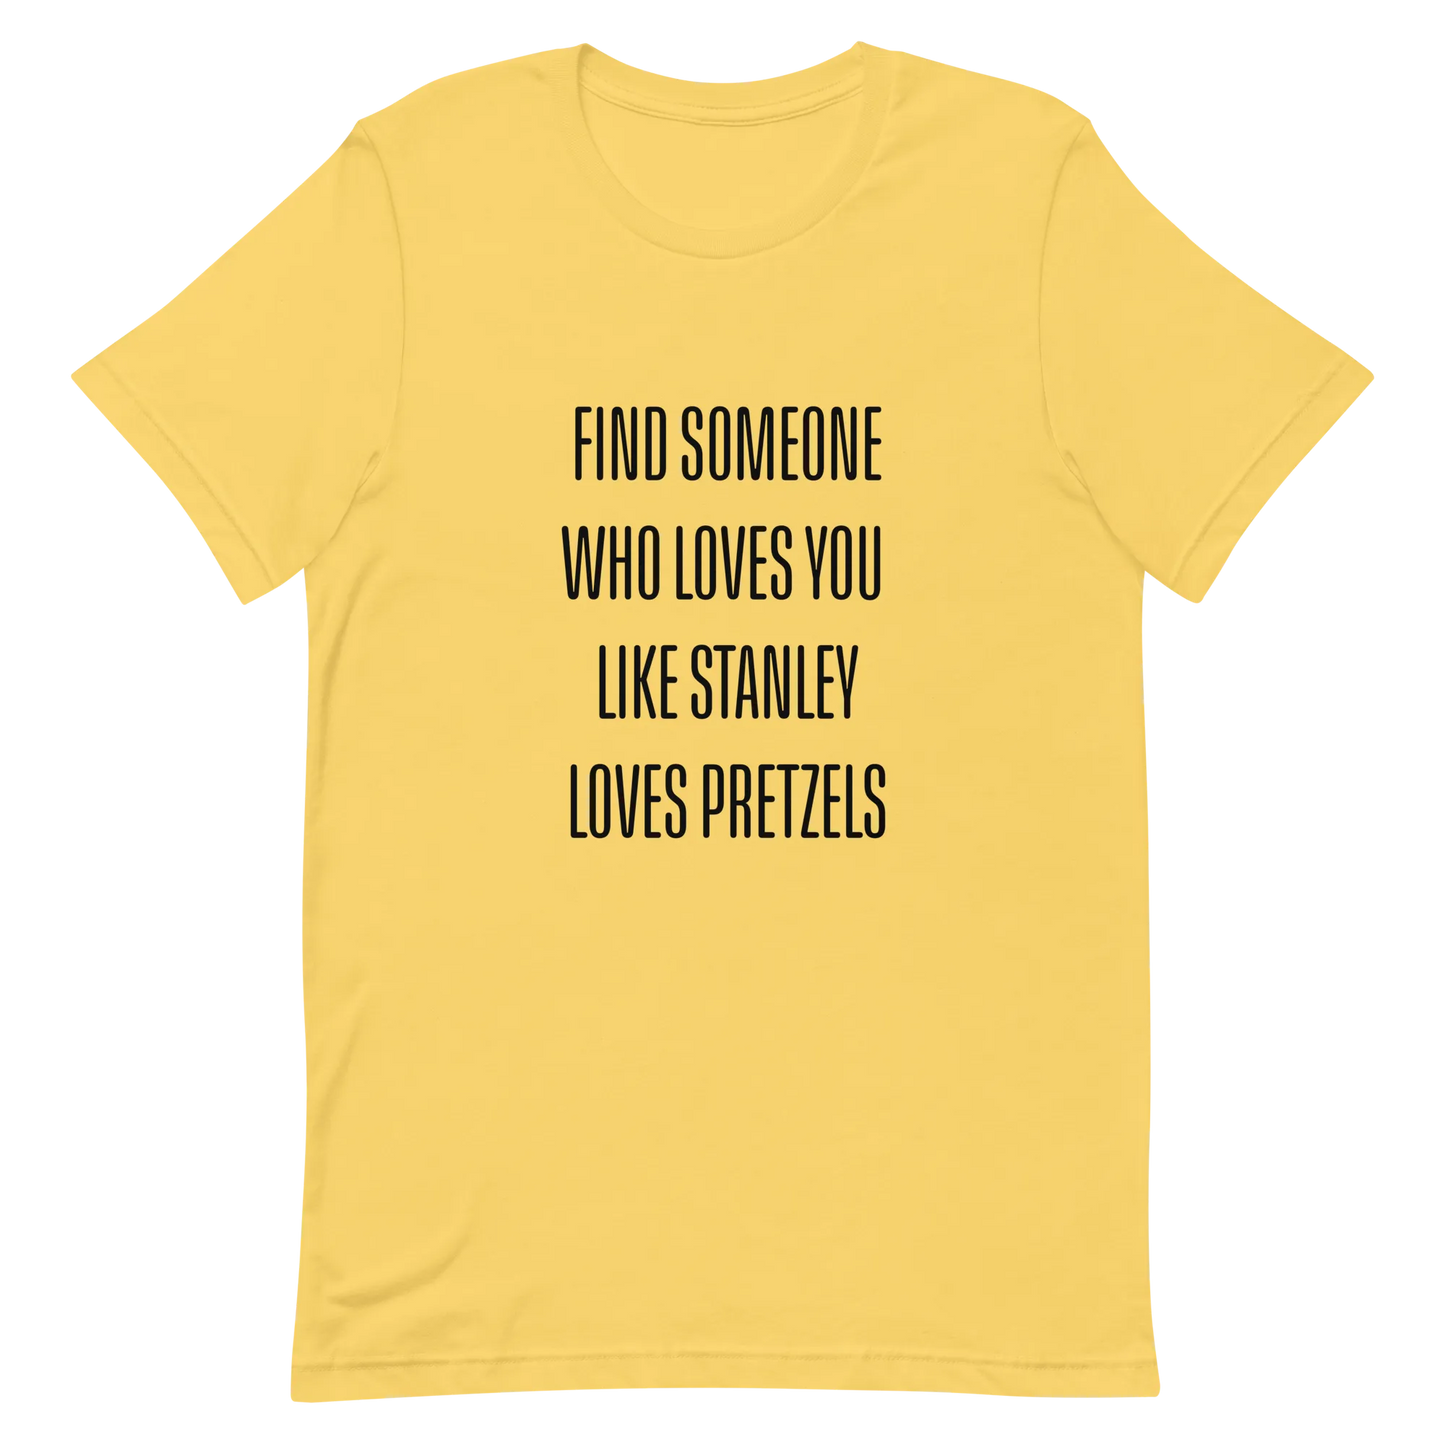 Stanley Loves Pretzels Tee in Yellow flatlay